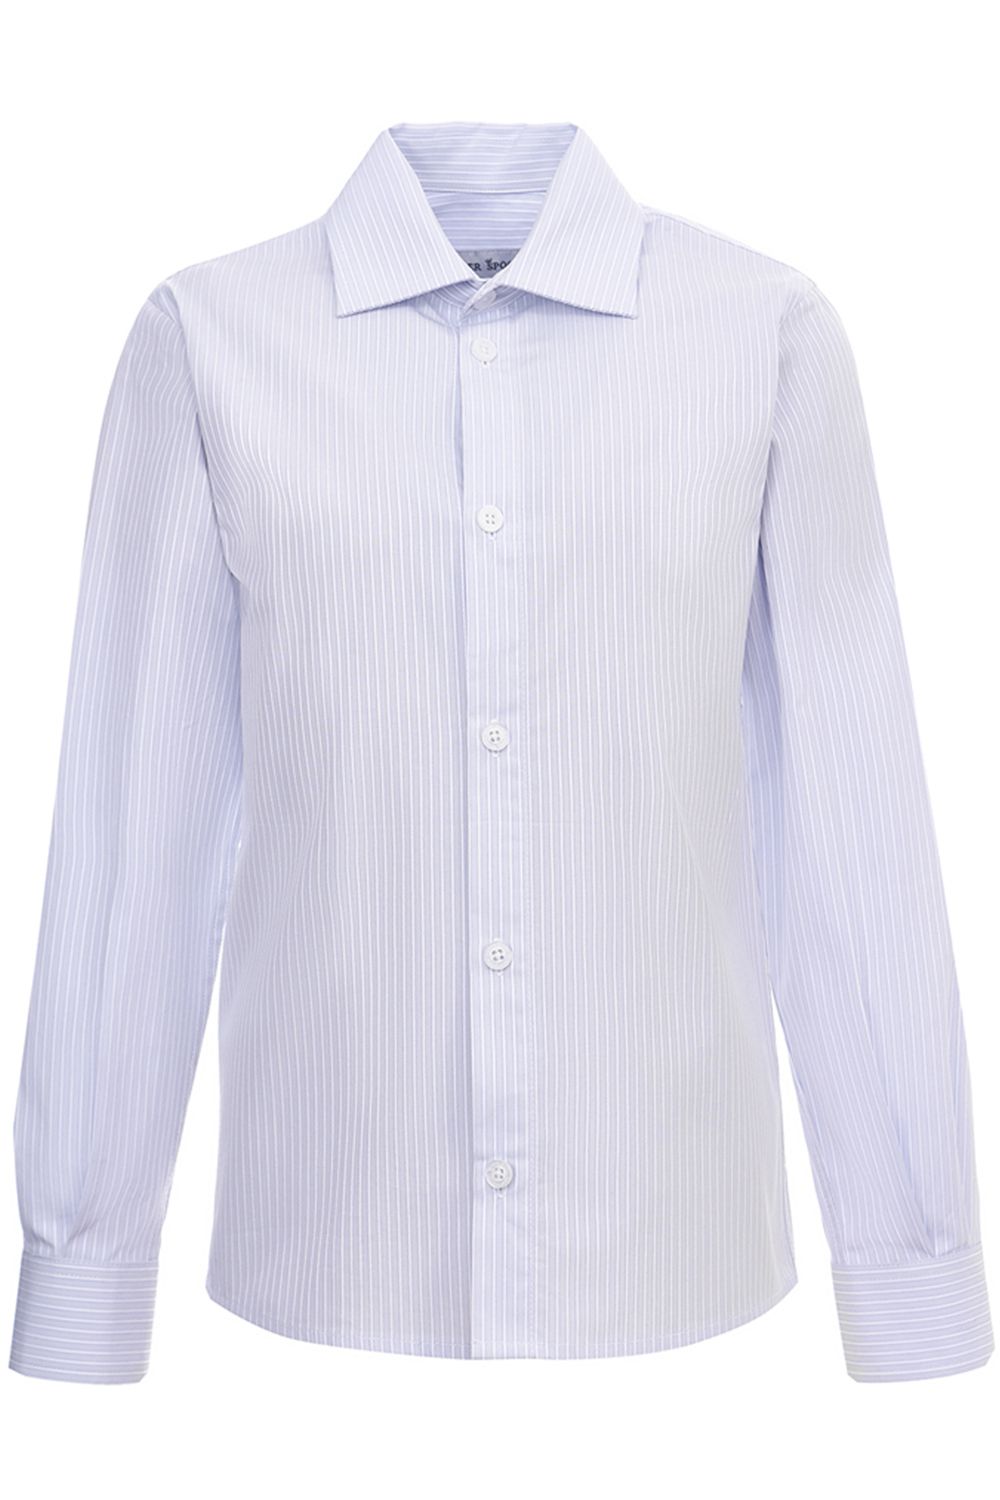 Рубашка Silver Spoon, размер 122, цвет разноцветный SSFSB-929-13852-314 - фото 1